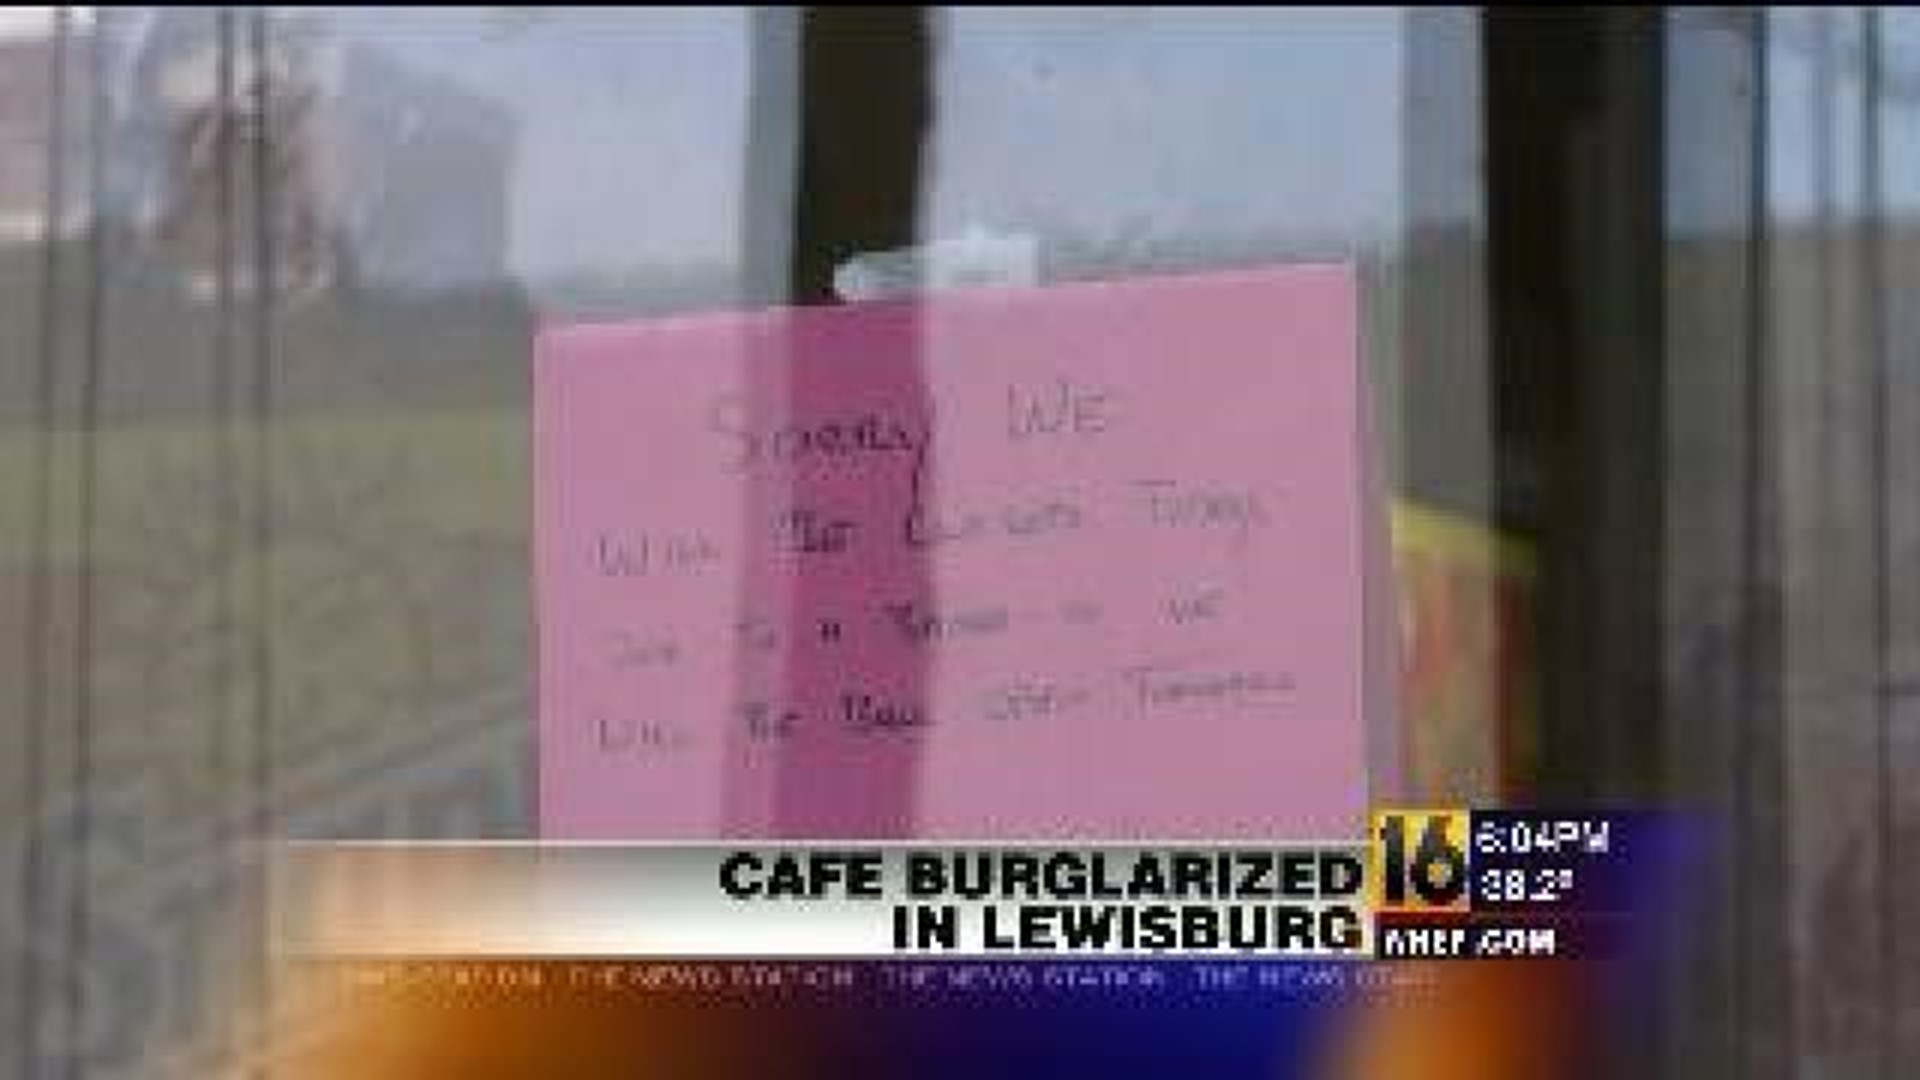 Cafe Burglarized in Lewisburg